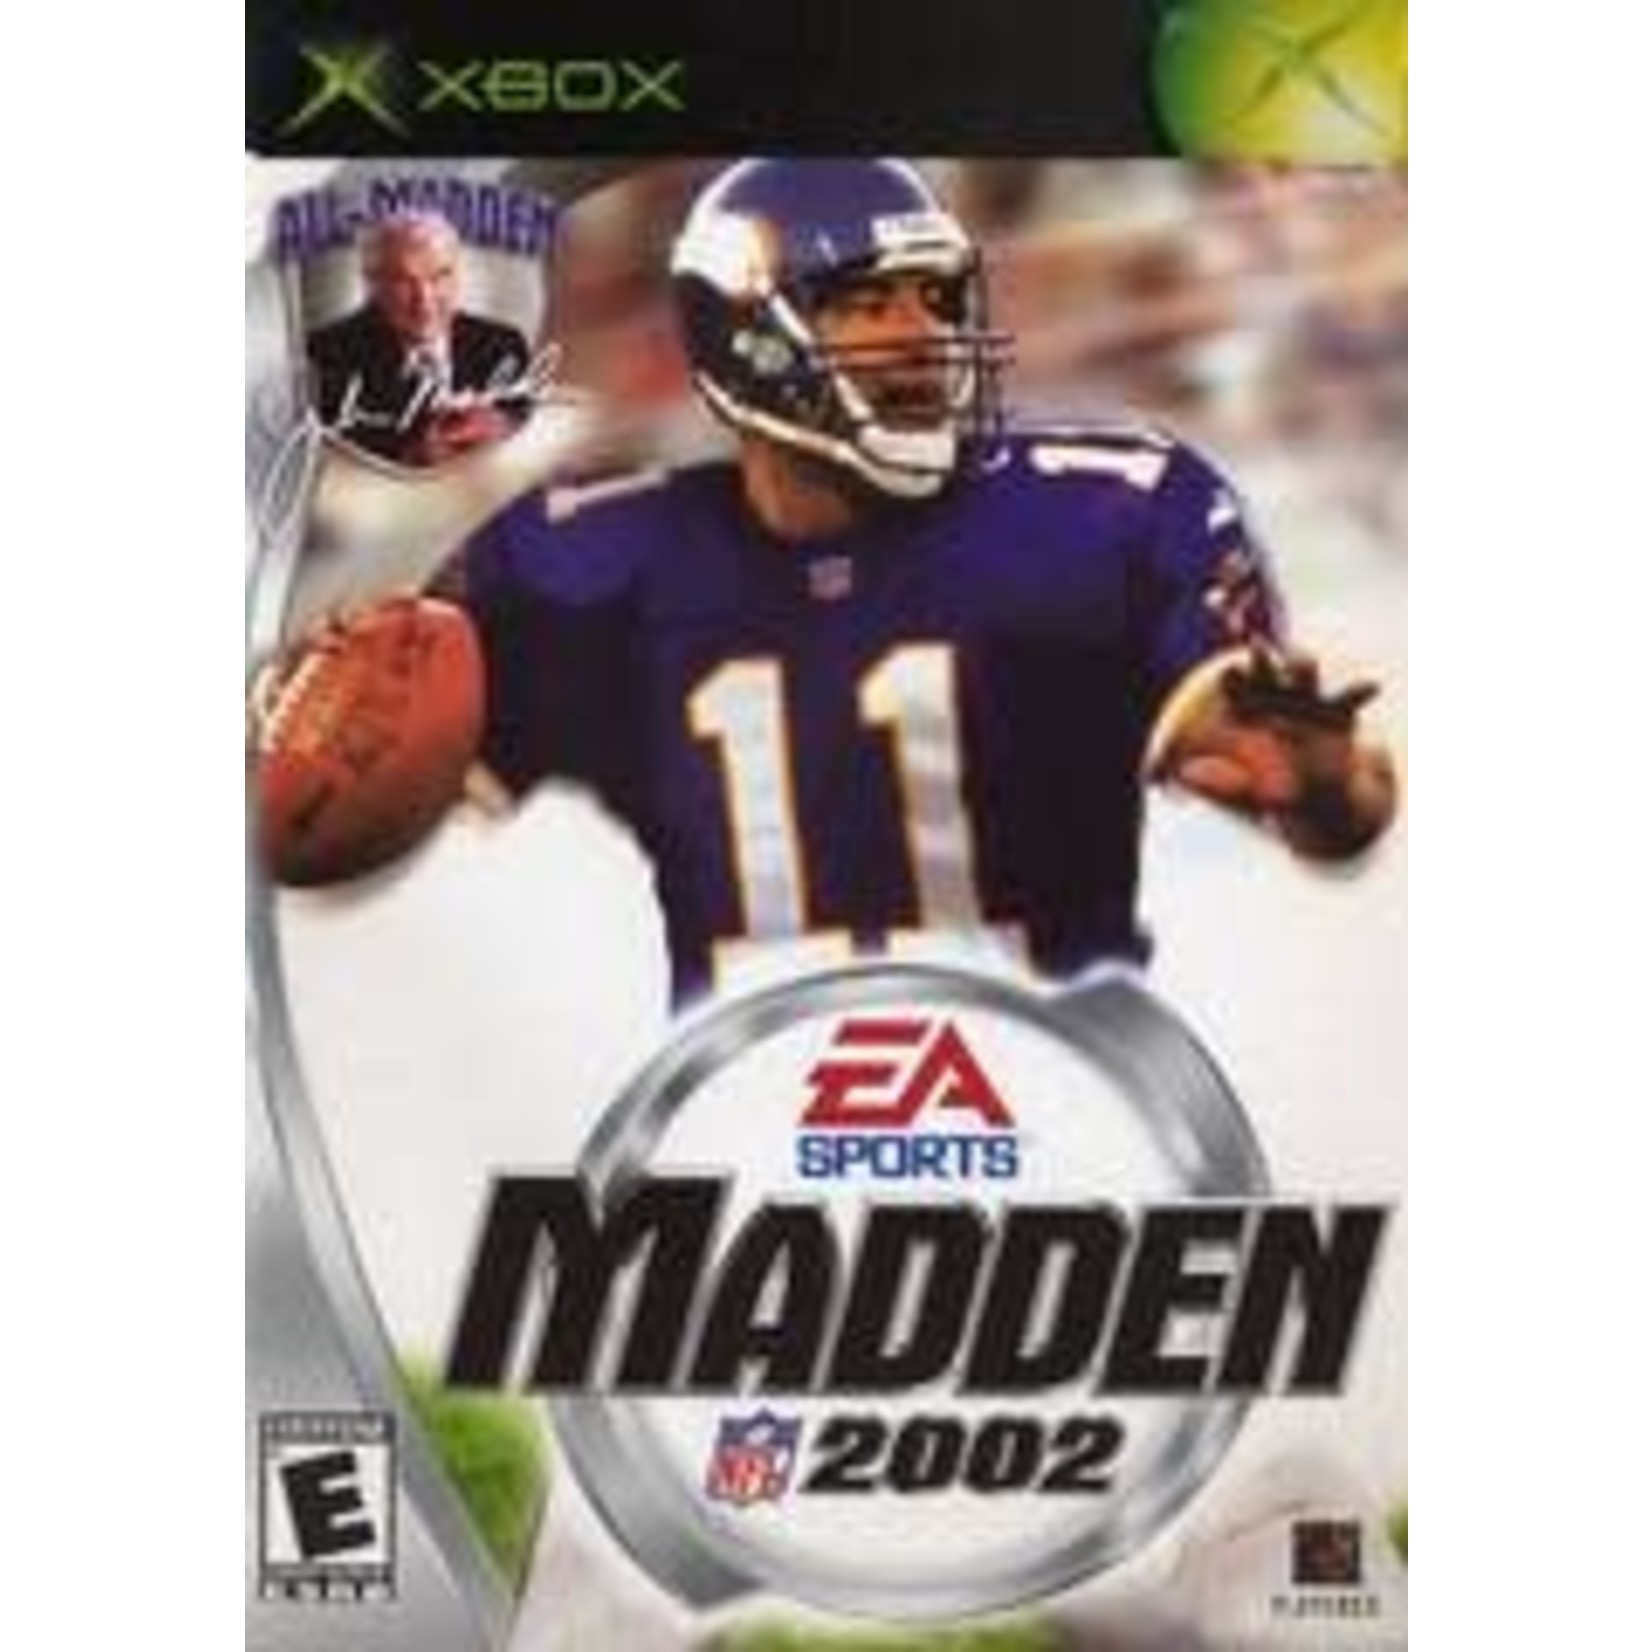 Xbox Madden 2002 [Xbox]